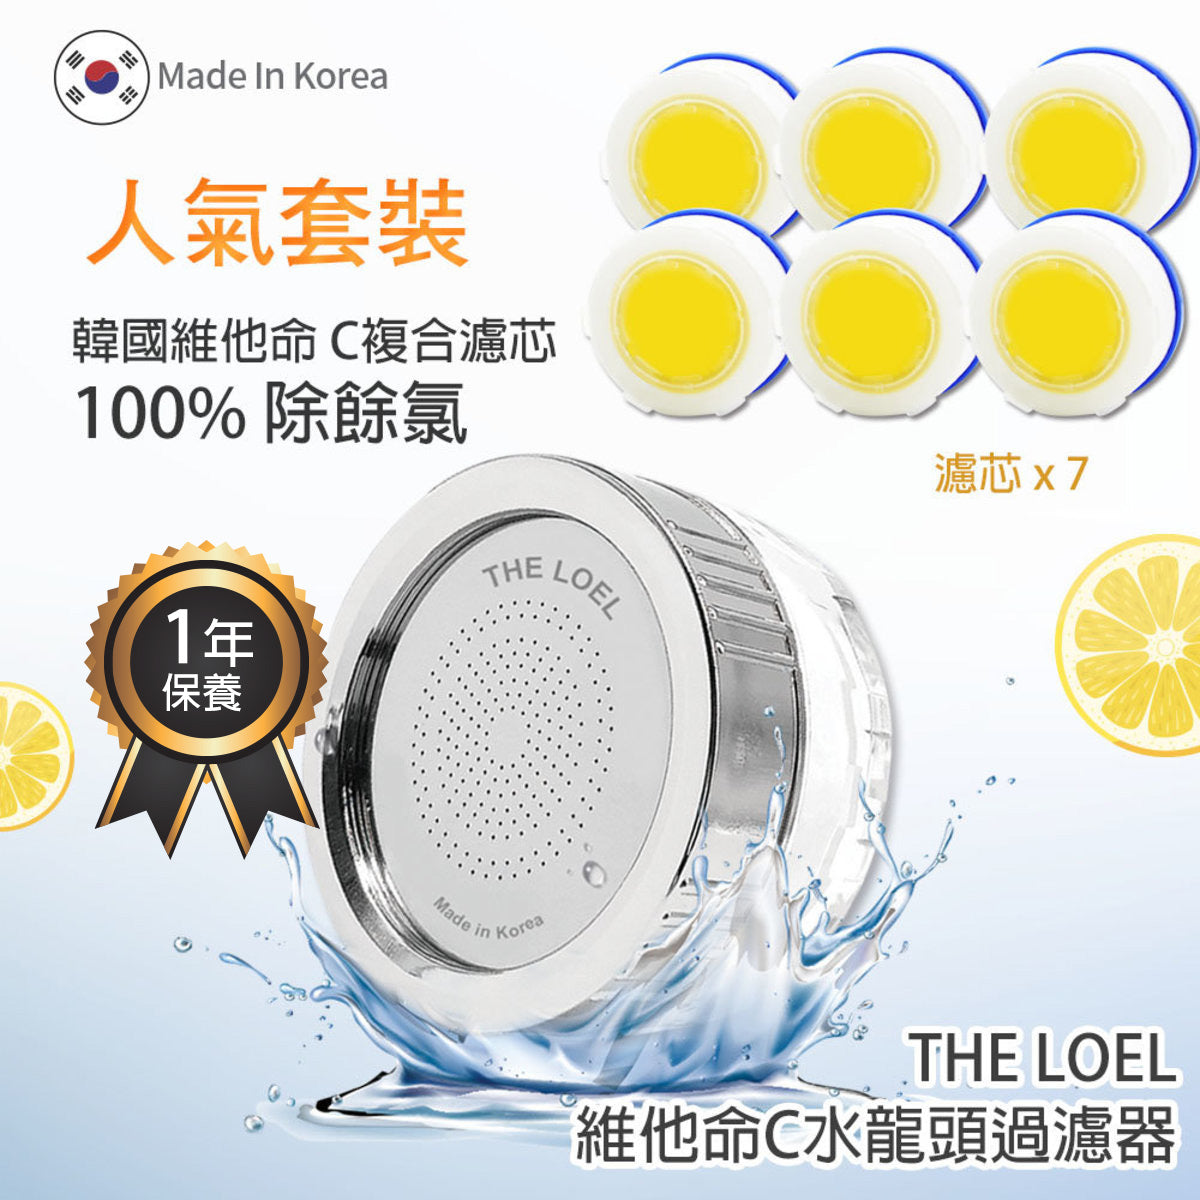 The Loel - 韓國維他命C 除氯水龍頭濾水器 (水龍頭1個, 濾芯7個) Korea Vitamin-C Faucet Water Filter Popular Set (1 shower head & 7 filter)